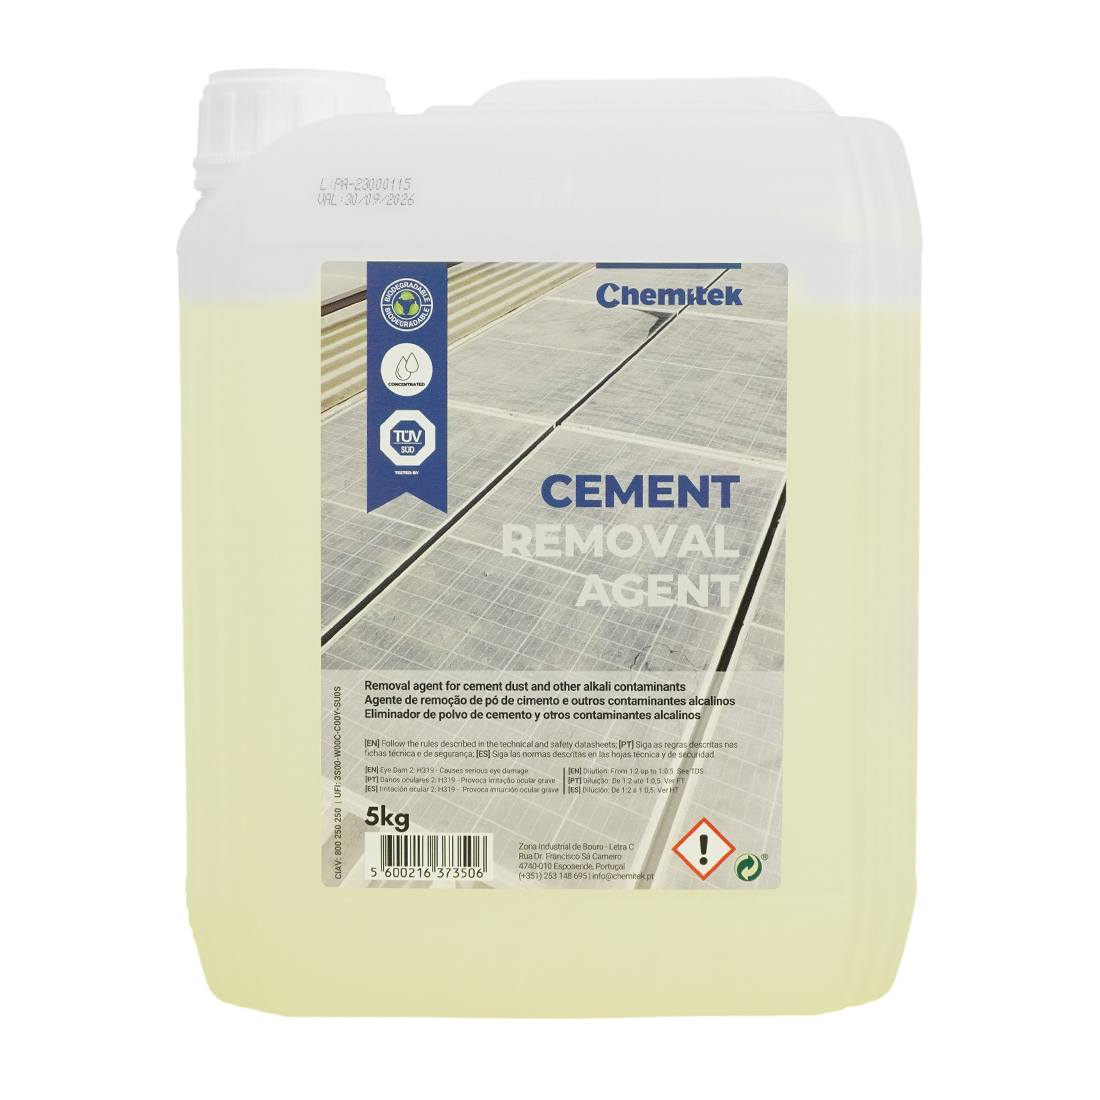 Chemitek Cement Removal Agent